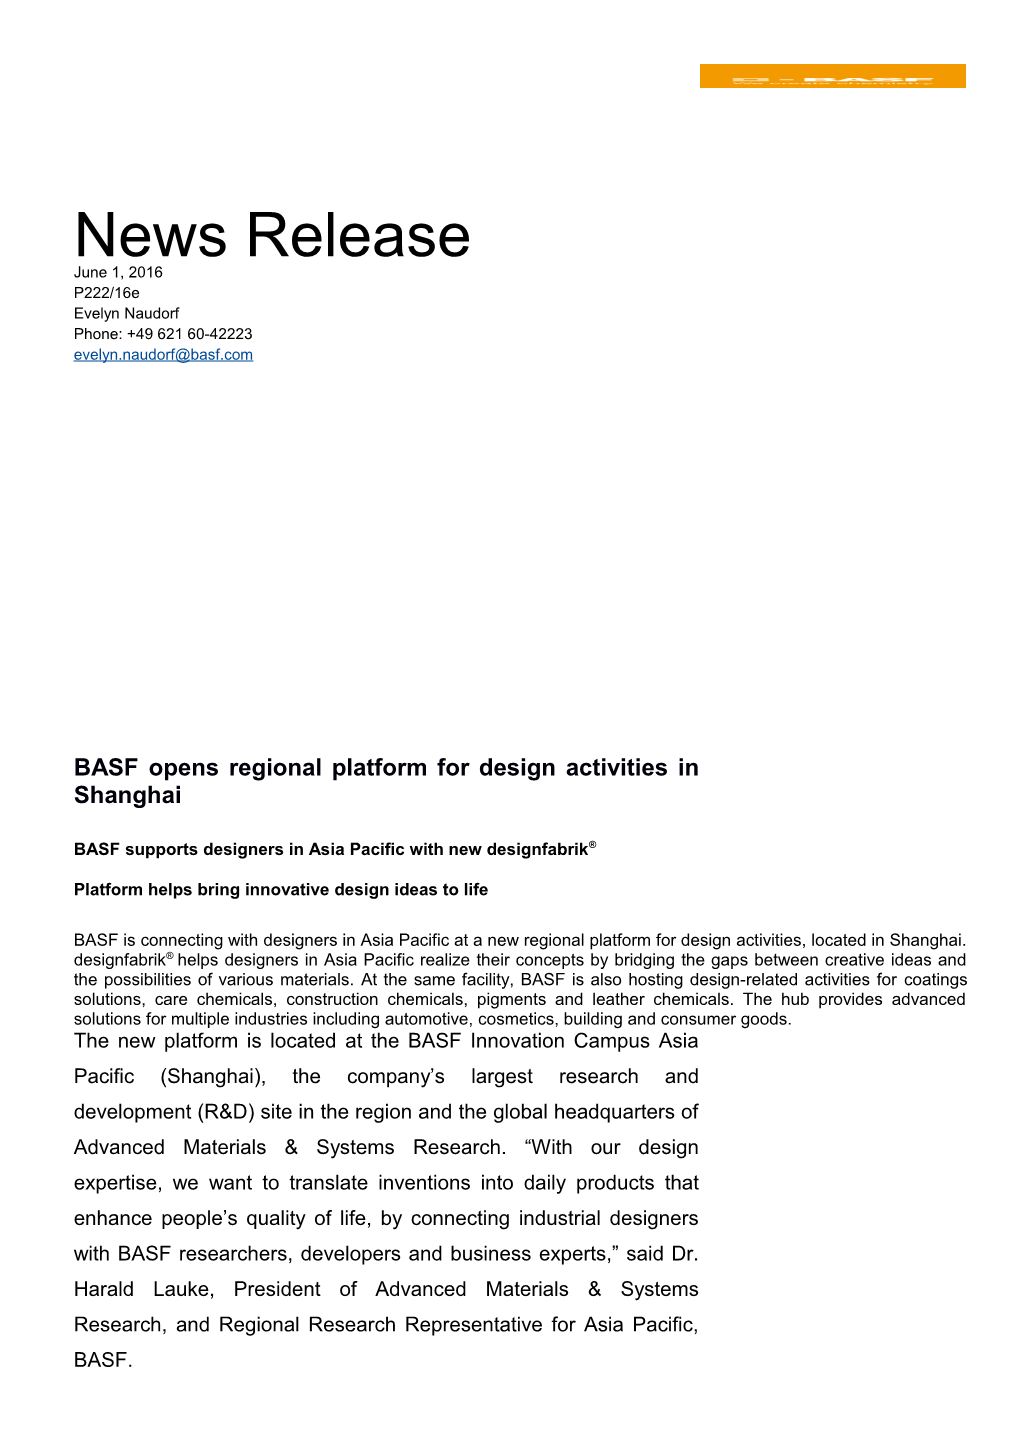 BASF Opens Regional Platform for Design Activities in Shanghai